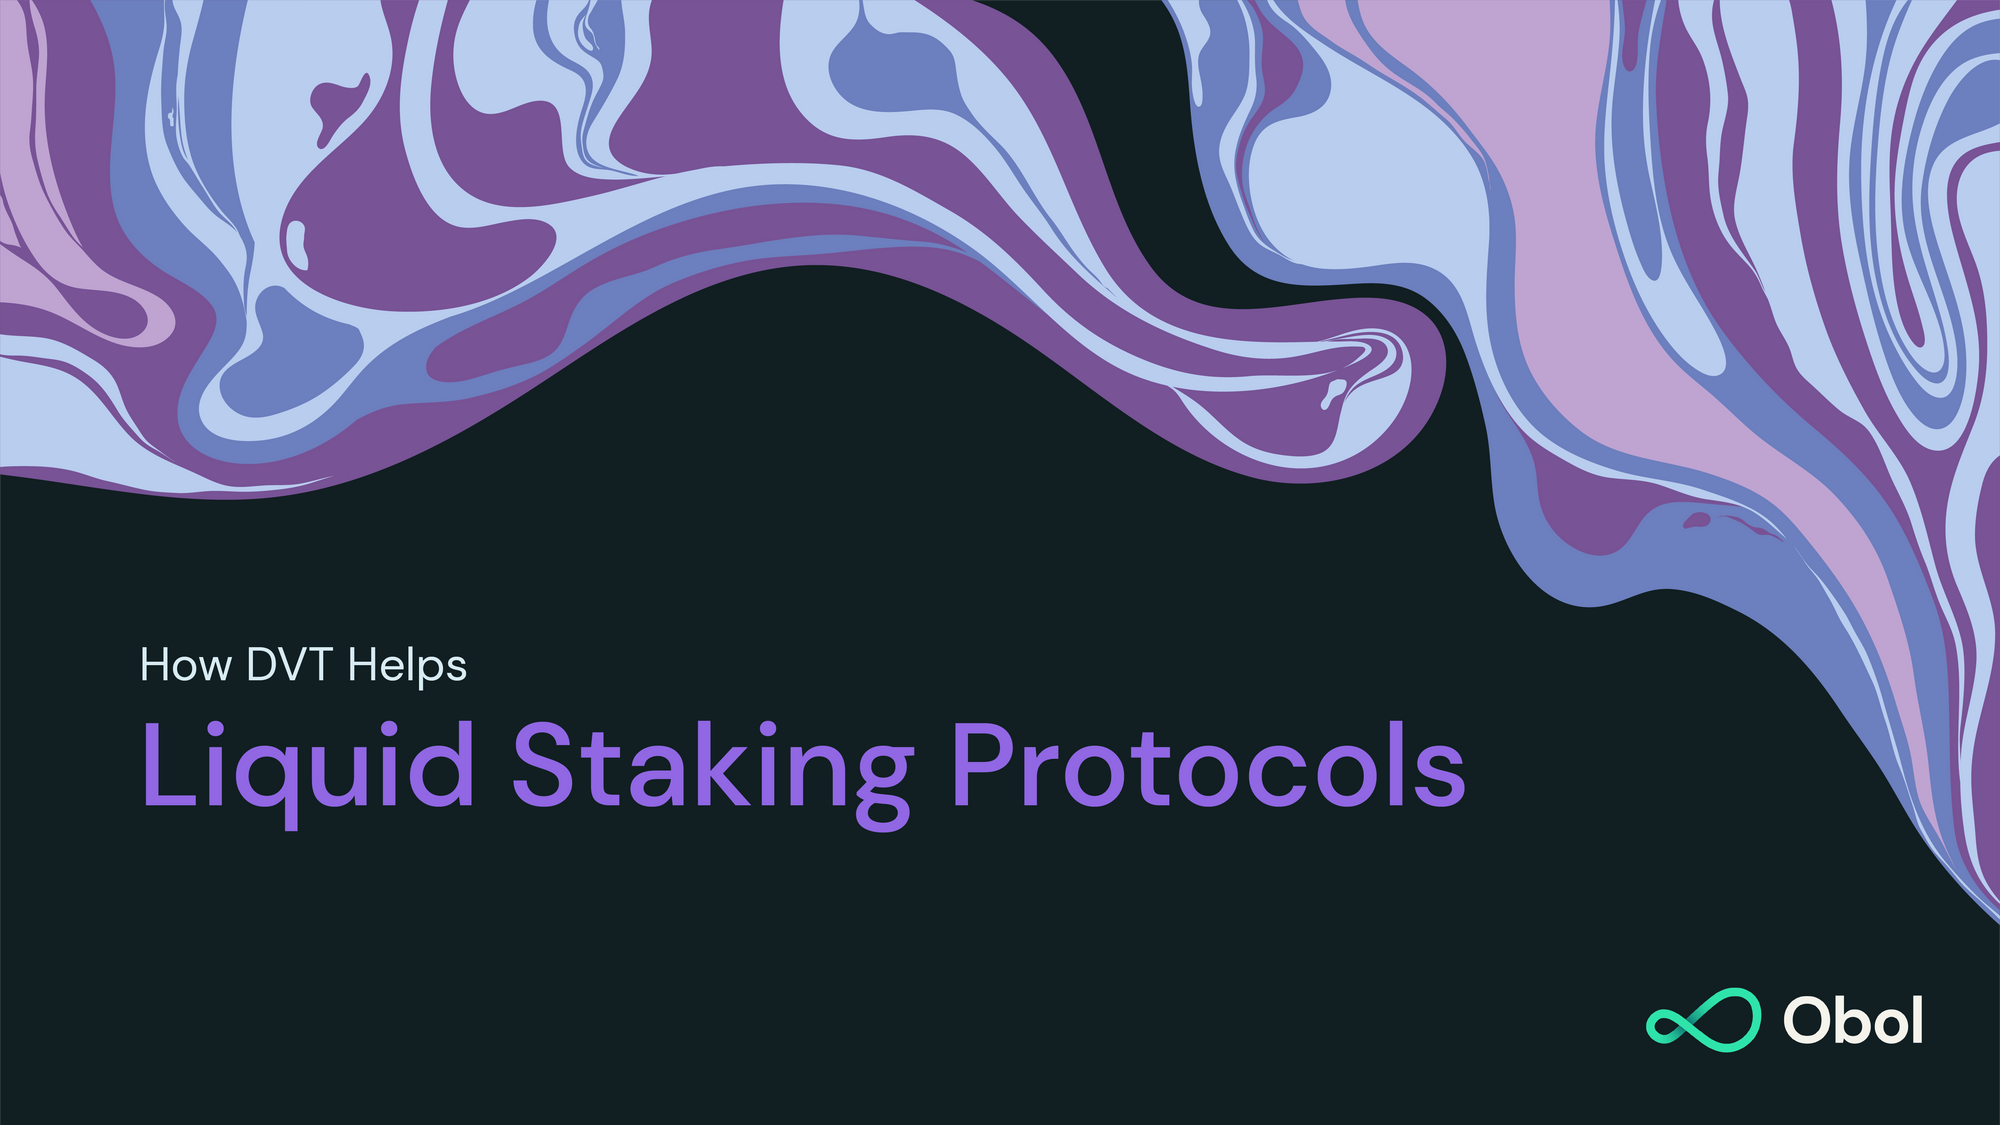 How DVT Helps: Liquid Staking Protocols